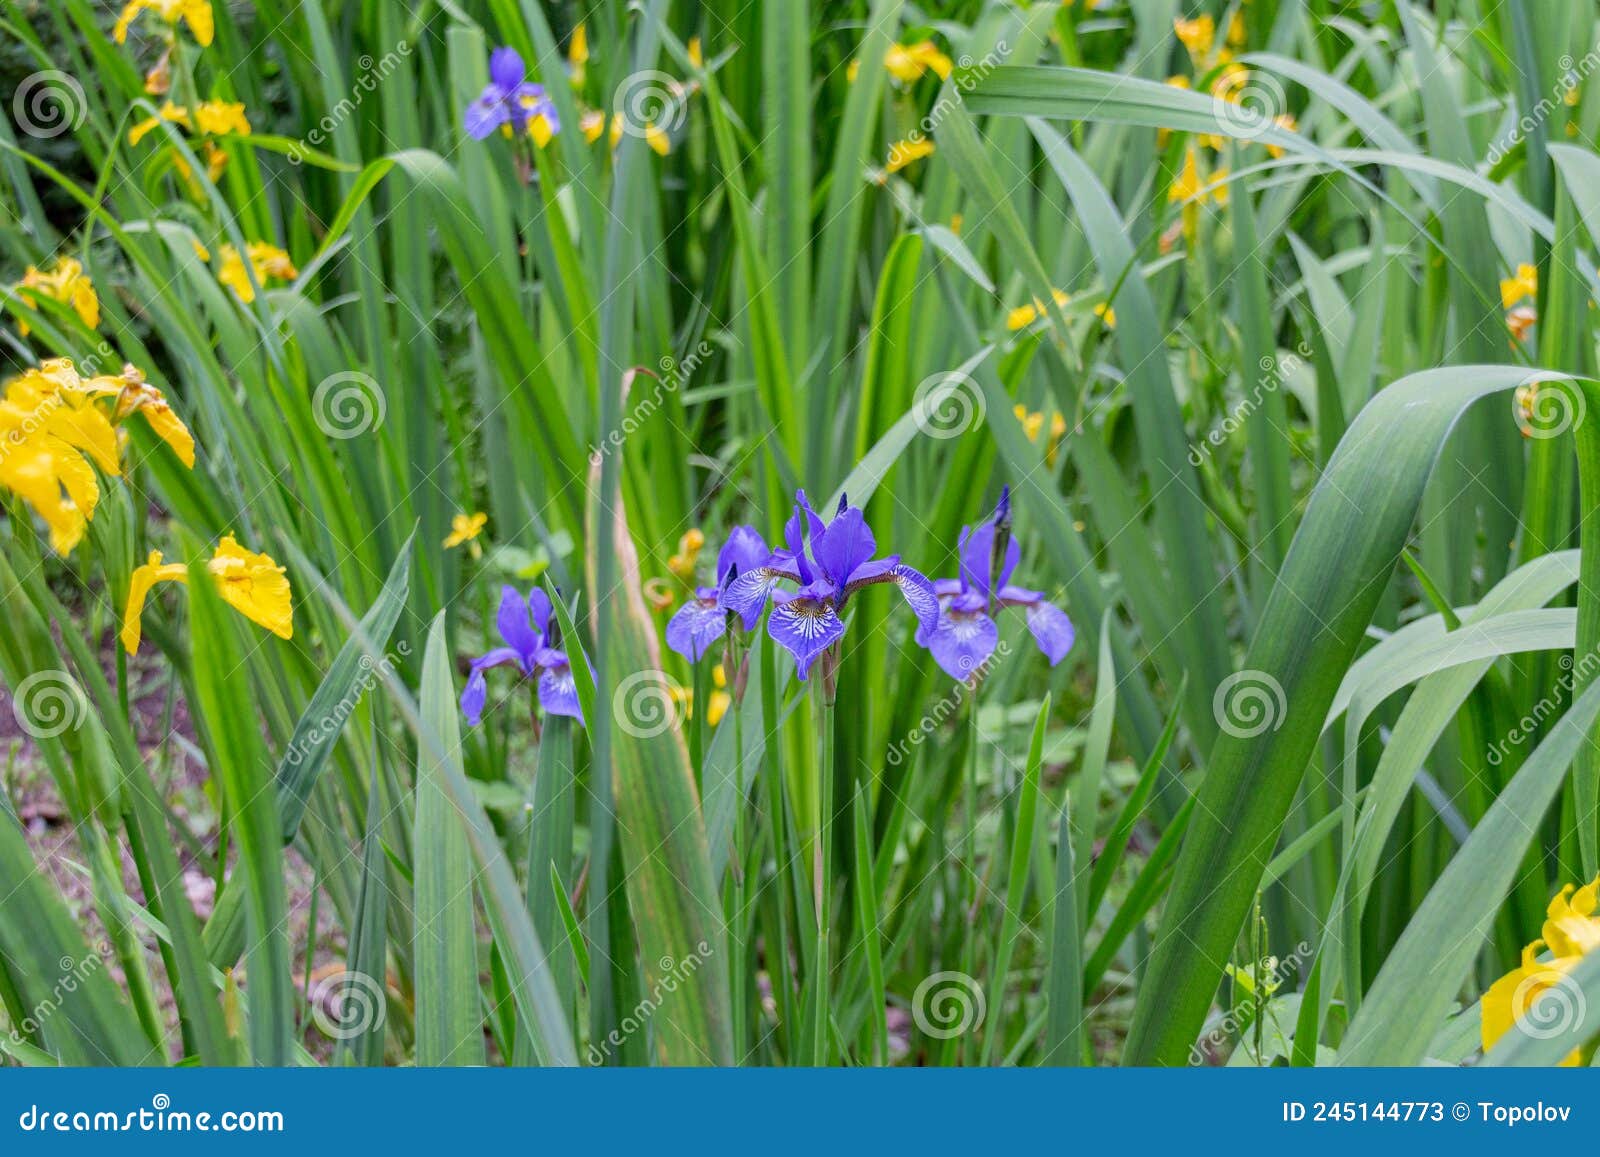 Blooming Yellow and Blue Iris Flowers Stock Image - Image of iris ...